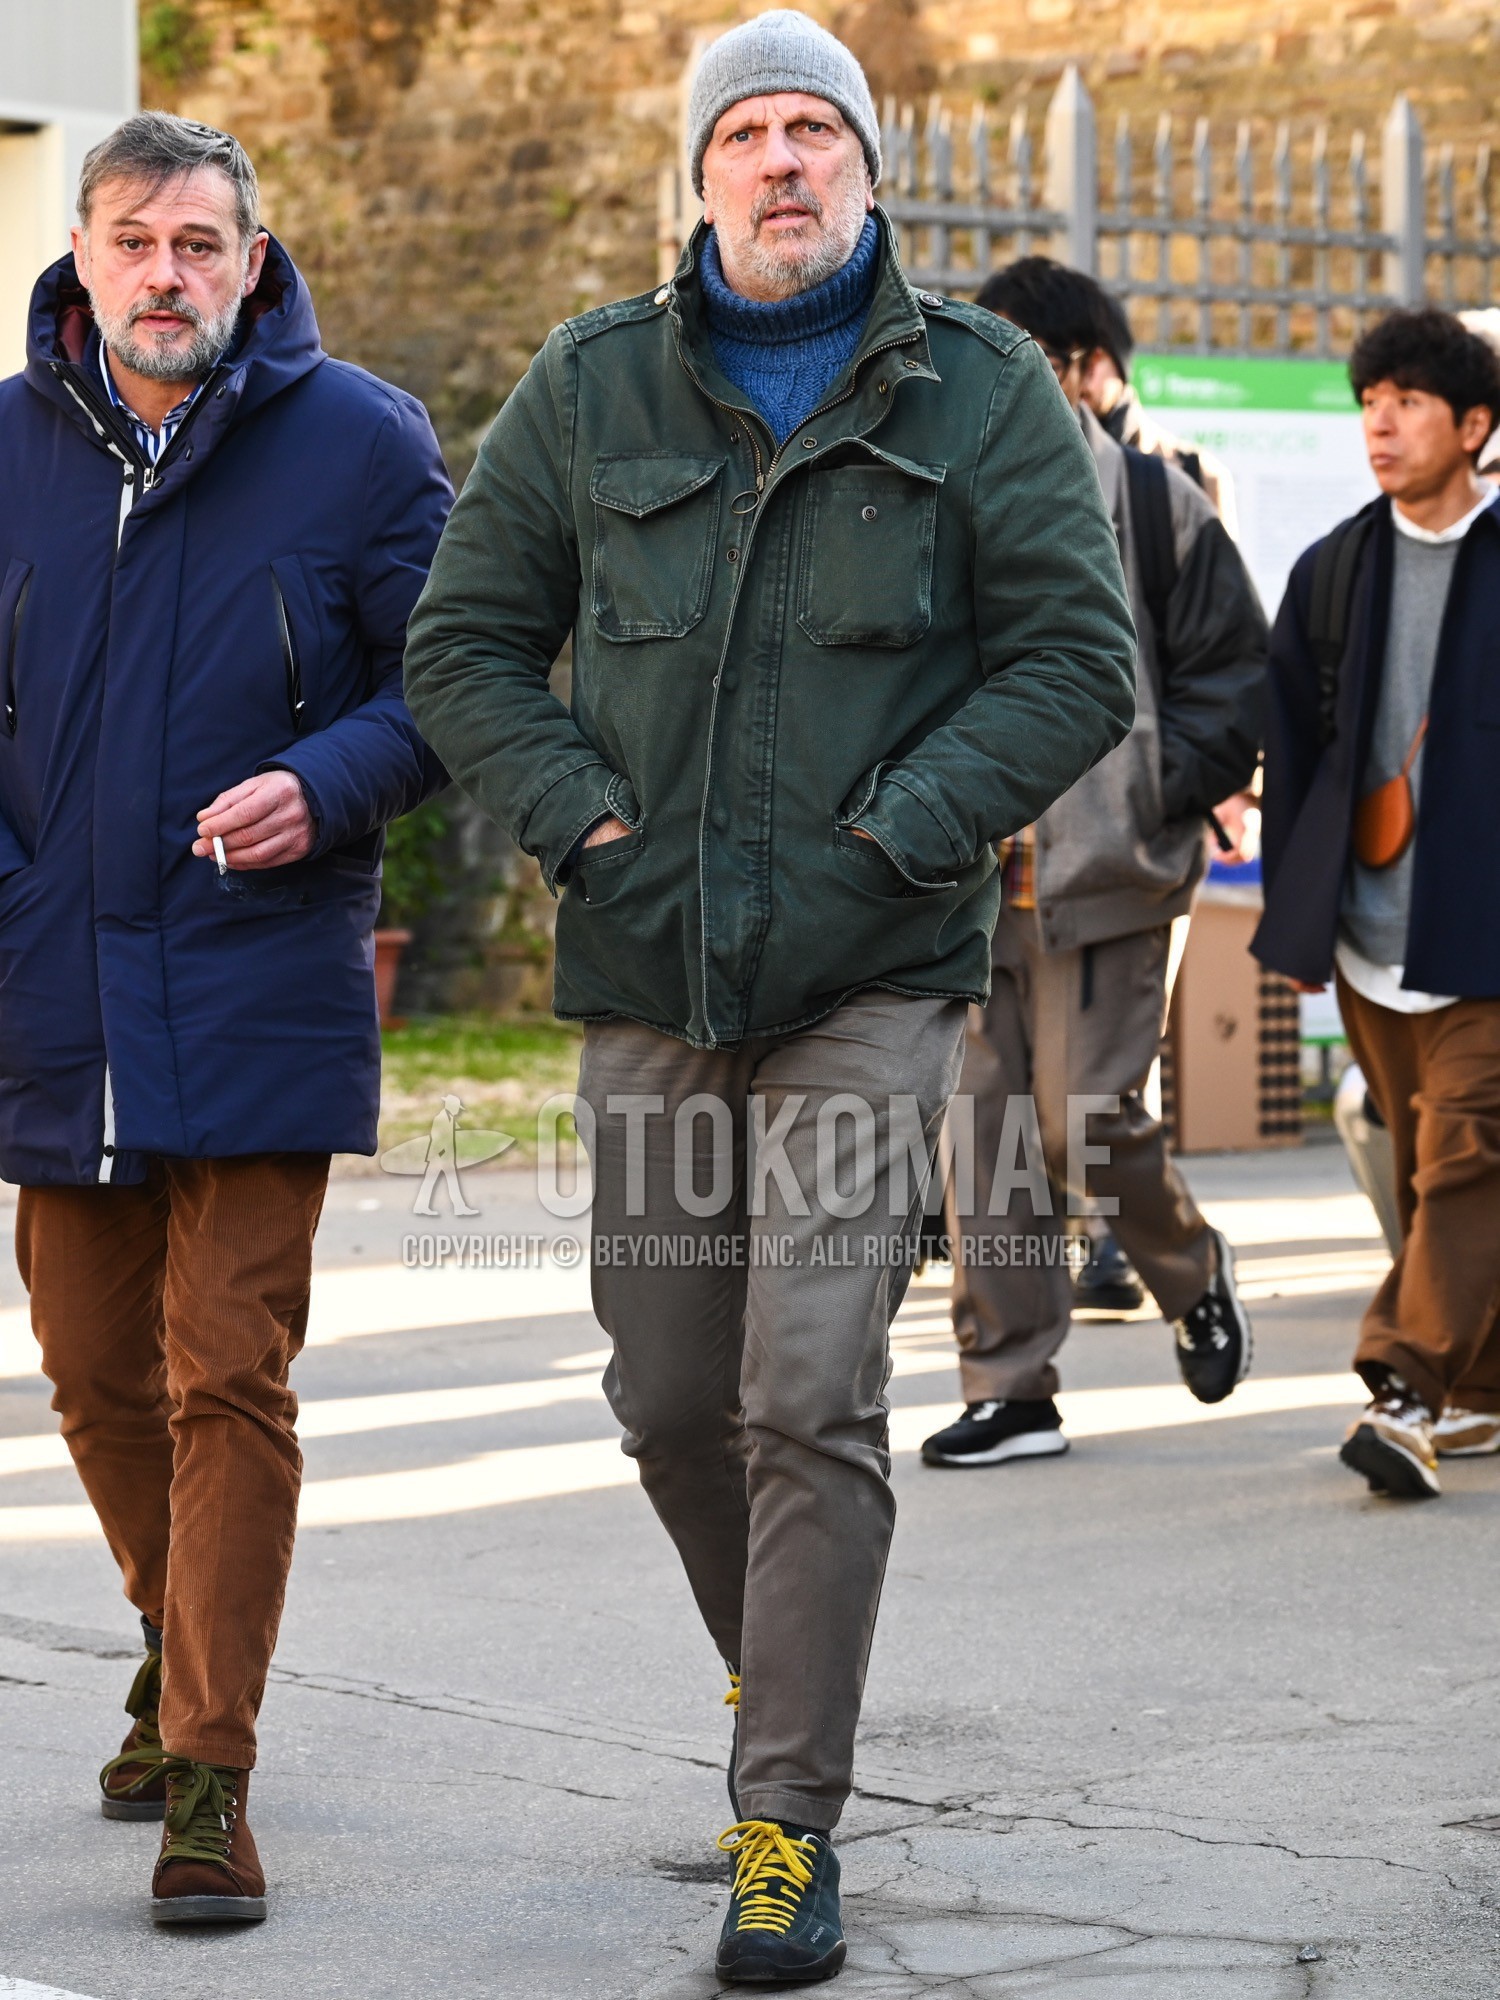 Men's autumn winter outfit with gray plain knit cap, olive green plain field jacket/hunting jacket, blue plain turtleneck knit, gray plain cotton pants, black low-cut sneakers.